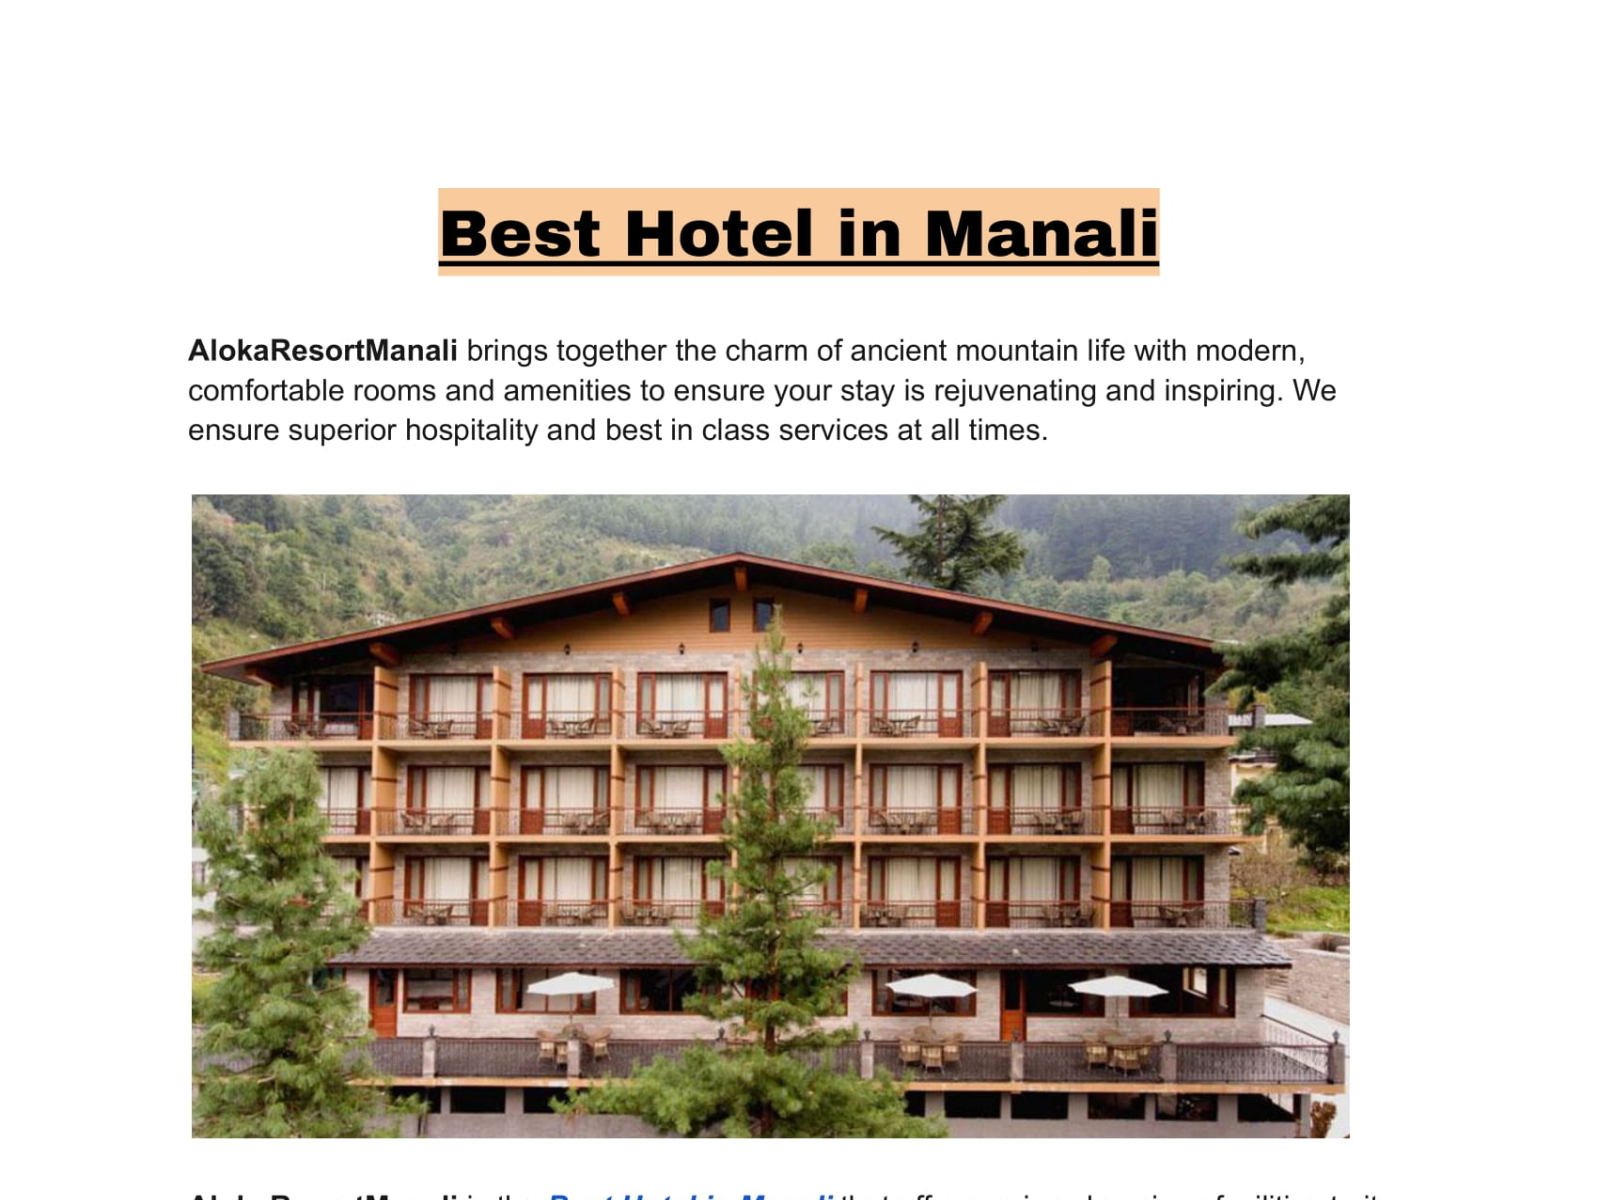 Best Hotel in Manali by Aloka Resort Manali on Dribbble